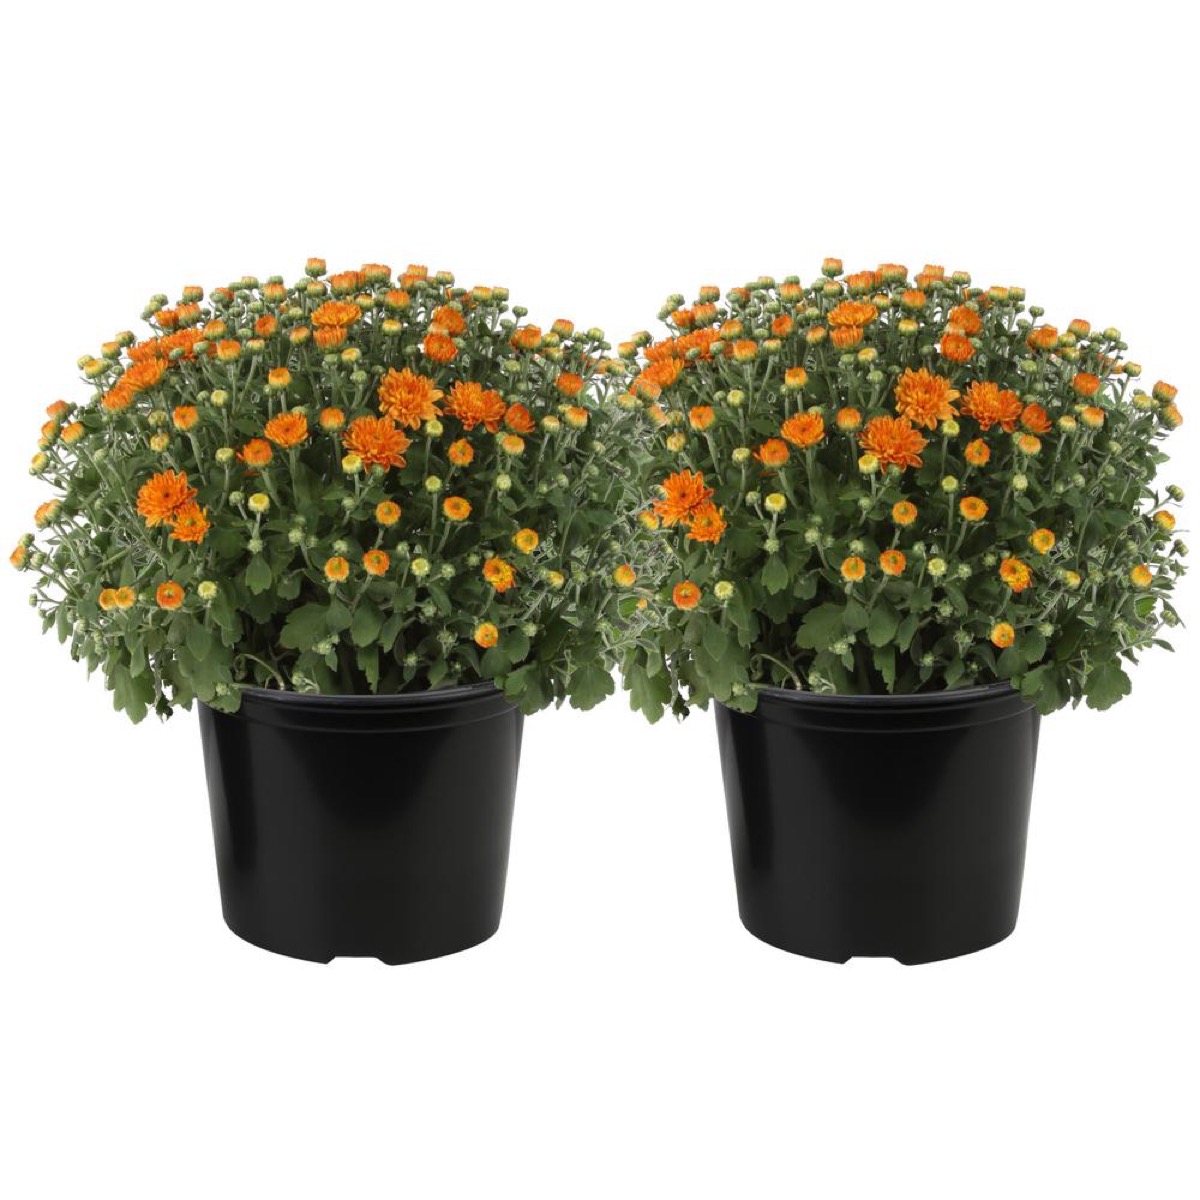 orange flowers in black pots, fall decorating tips